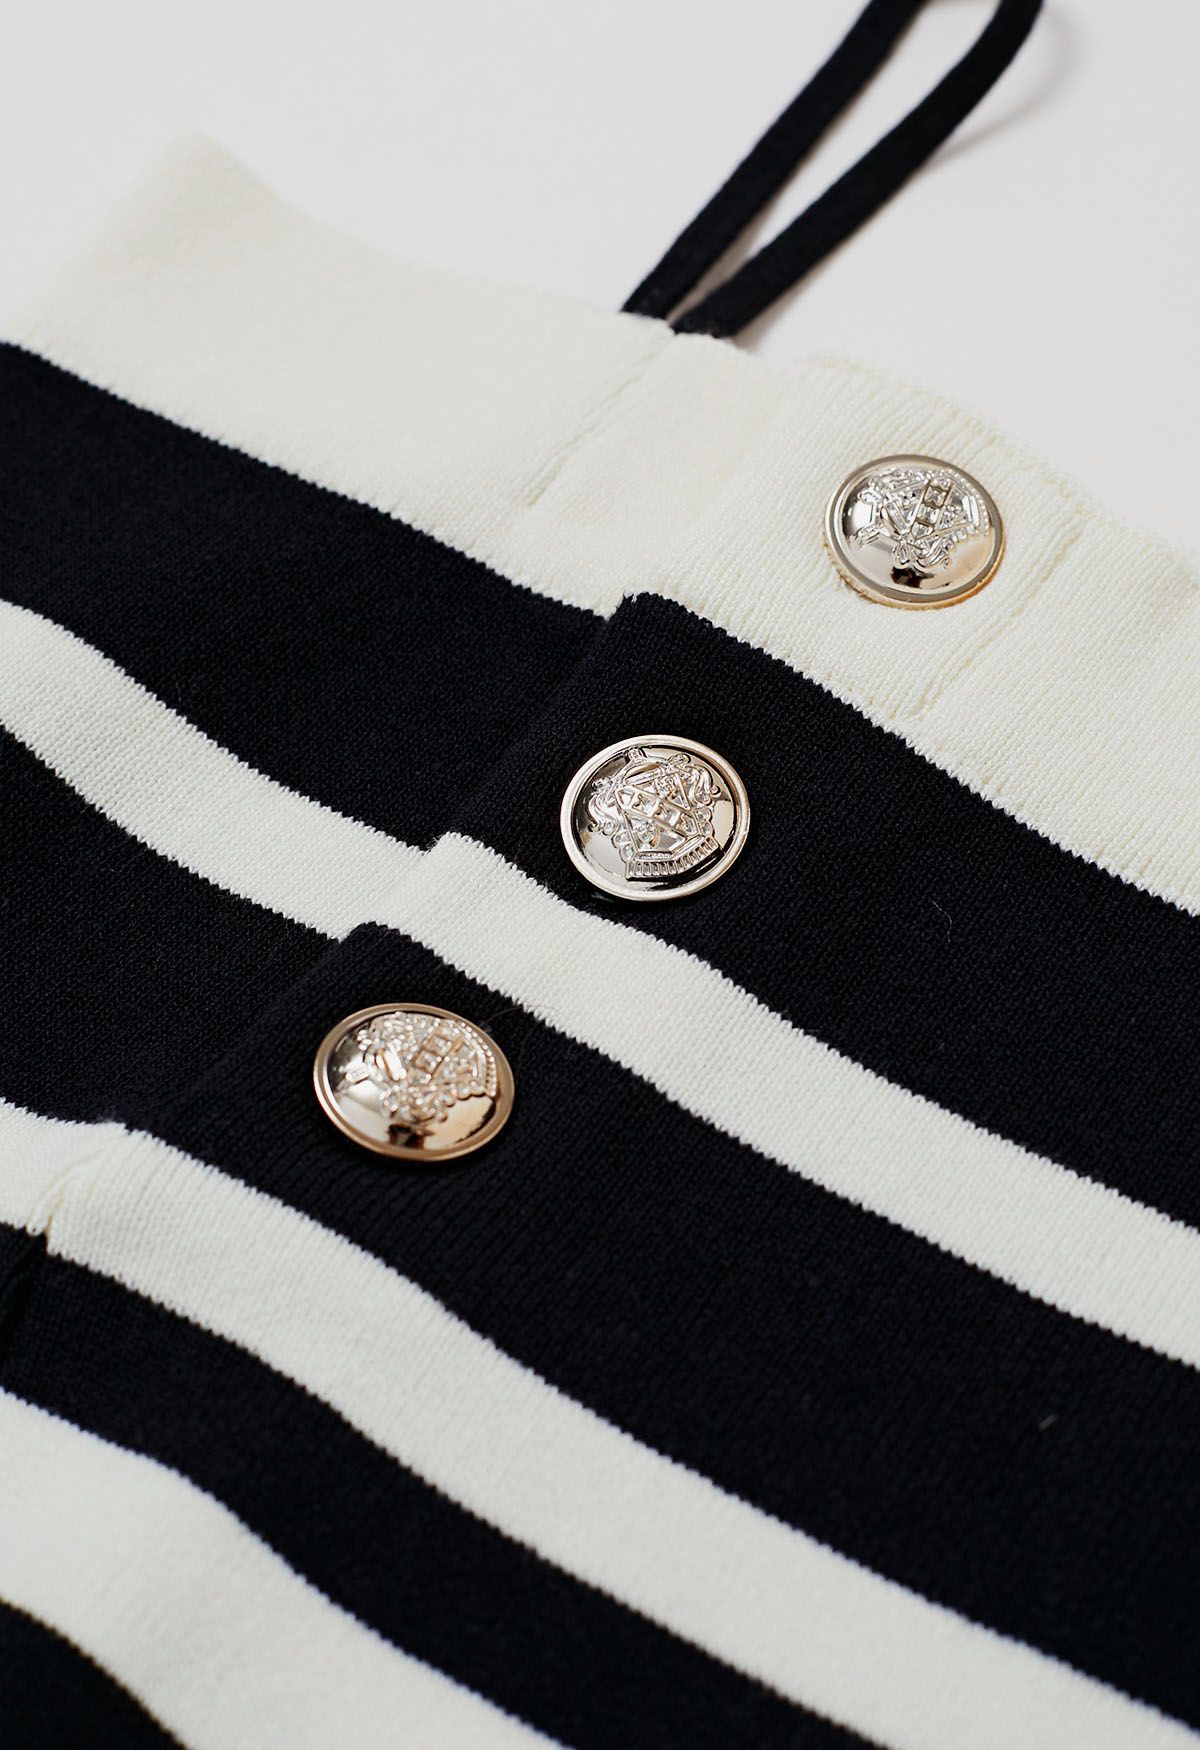 Contrast Stripe Button Trim Knit Cami Top